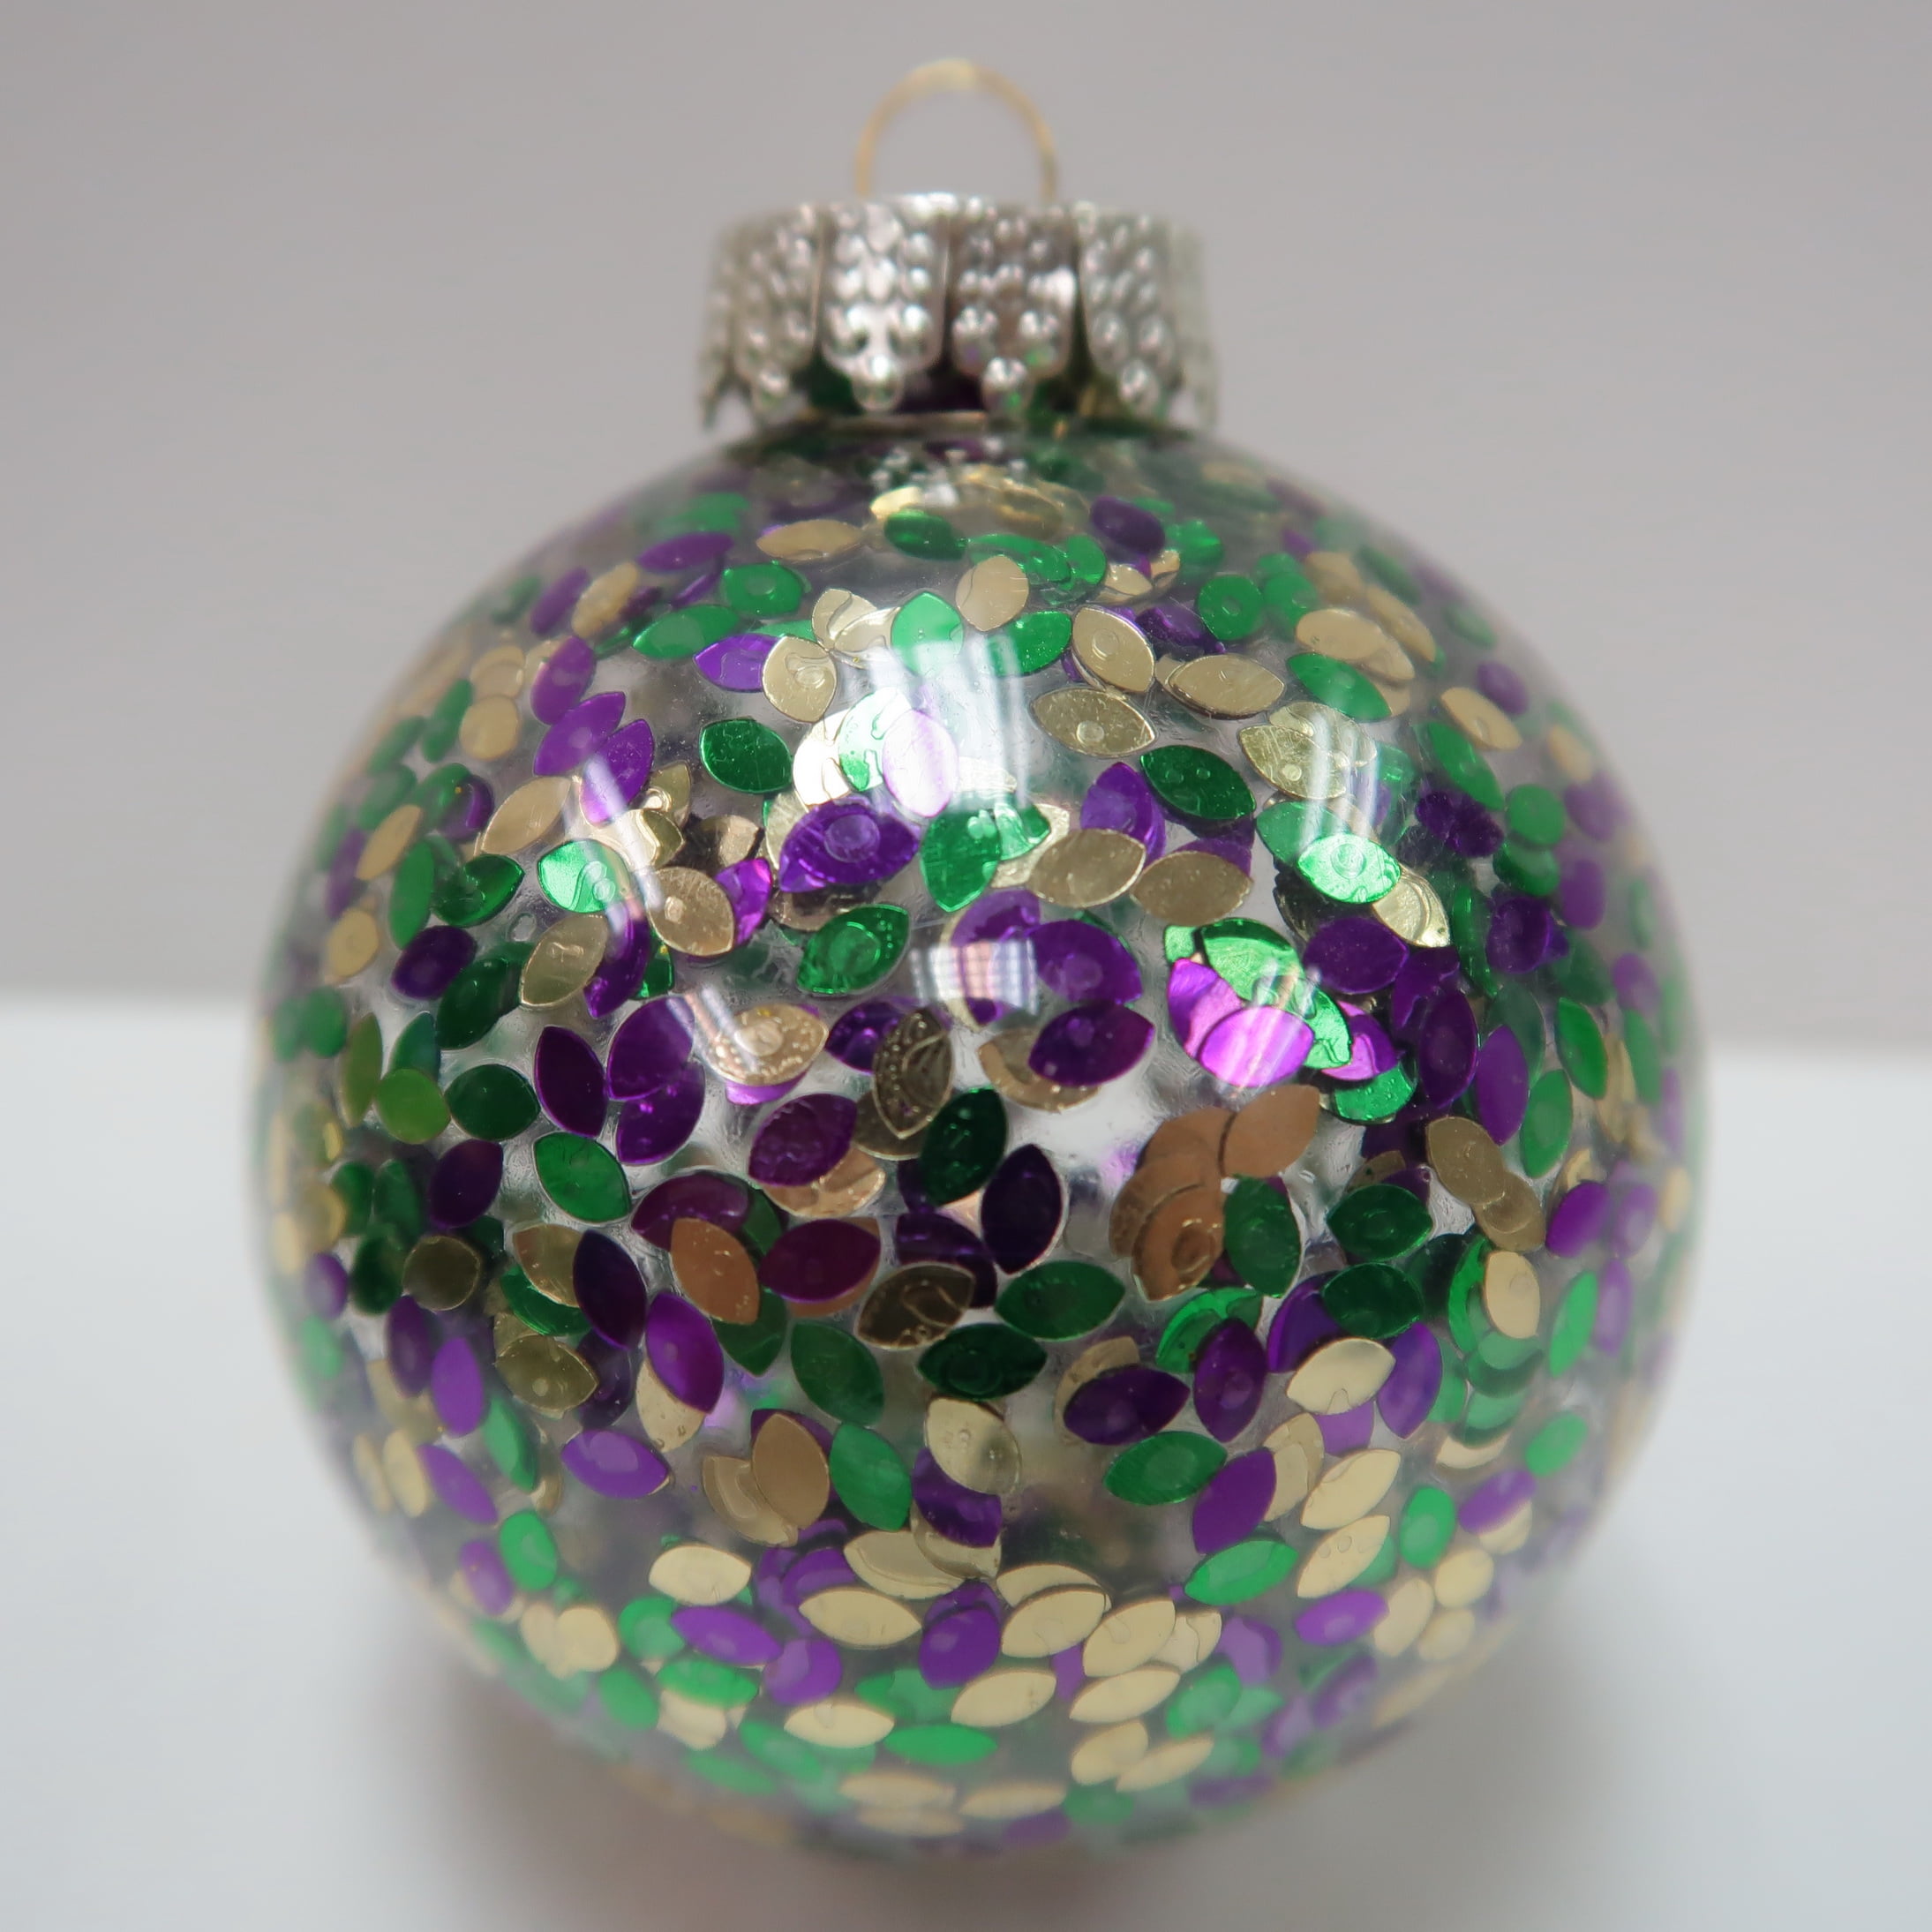 Deloky 24 PCS Mardi Gras Sequin Ball Ornaments-1.5 Inch Mardi Gras  Shatterproof Hanging Ball-Purple Green Gold Tree Ornaments for Mardi Gras  Holiday